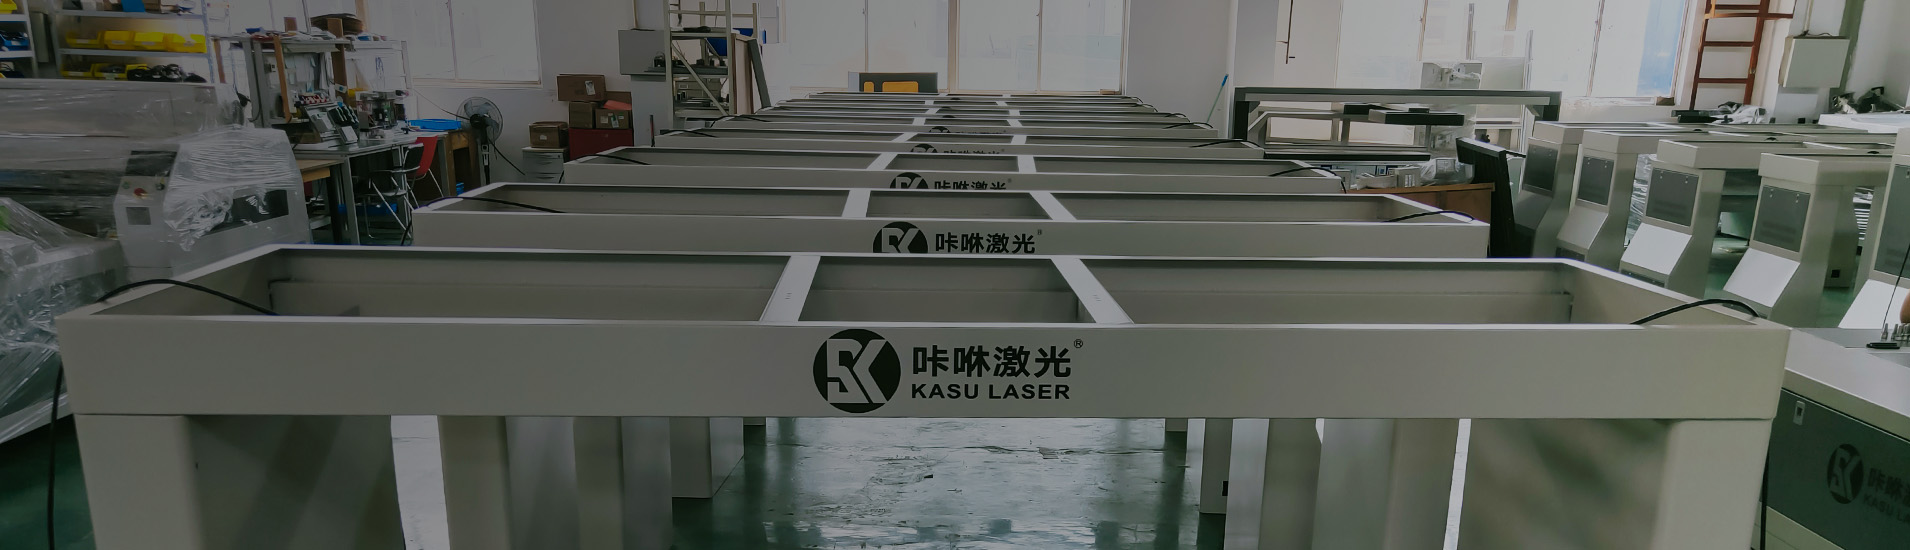 KASU Provider of Laser Cutter with Camera Machine